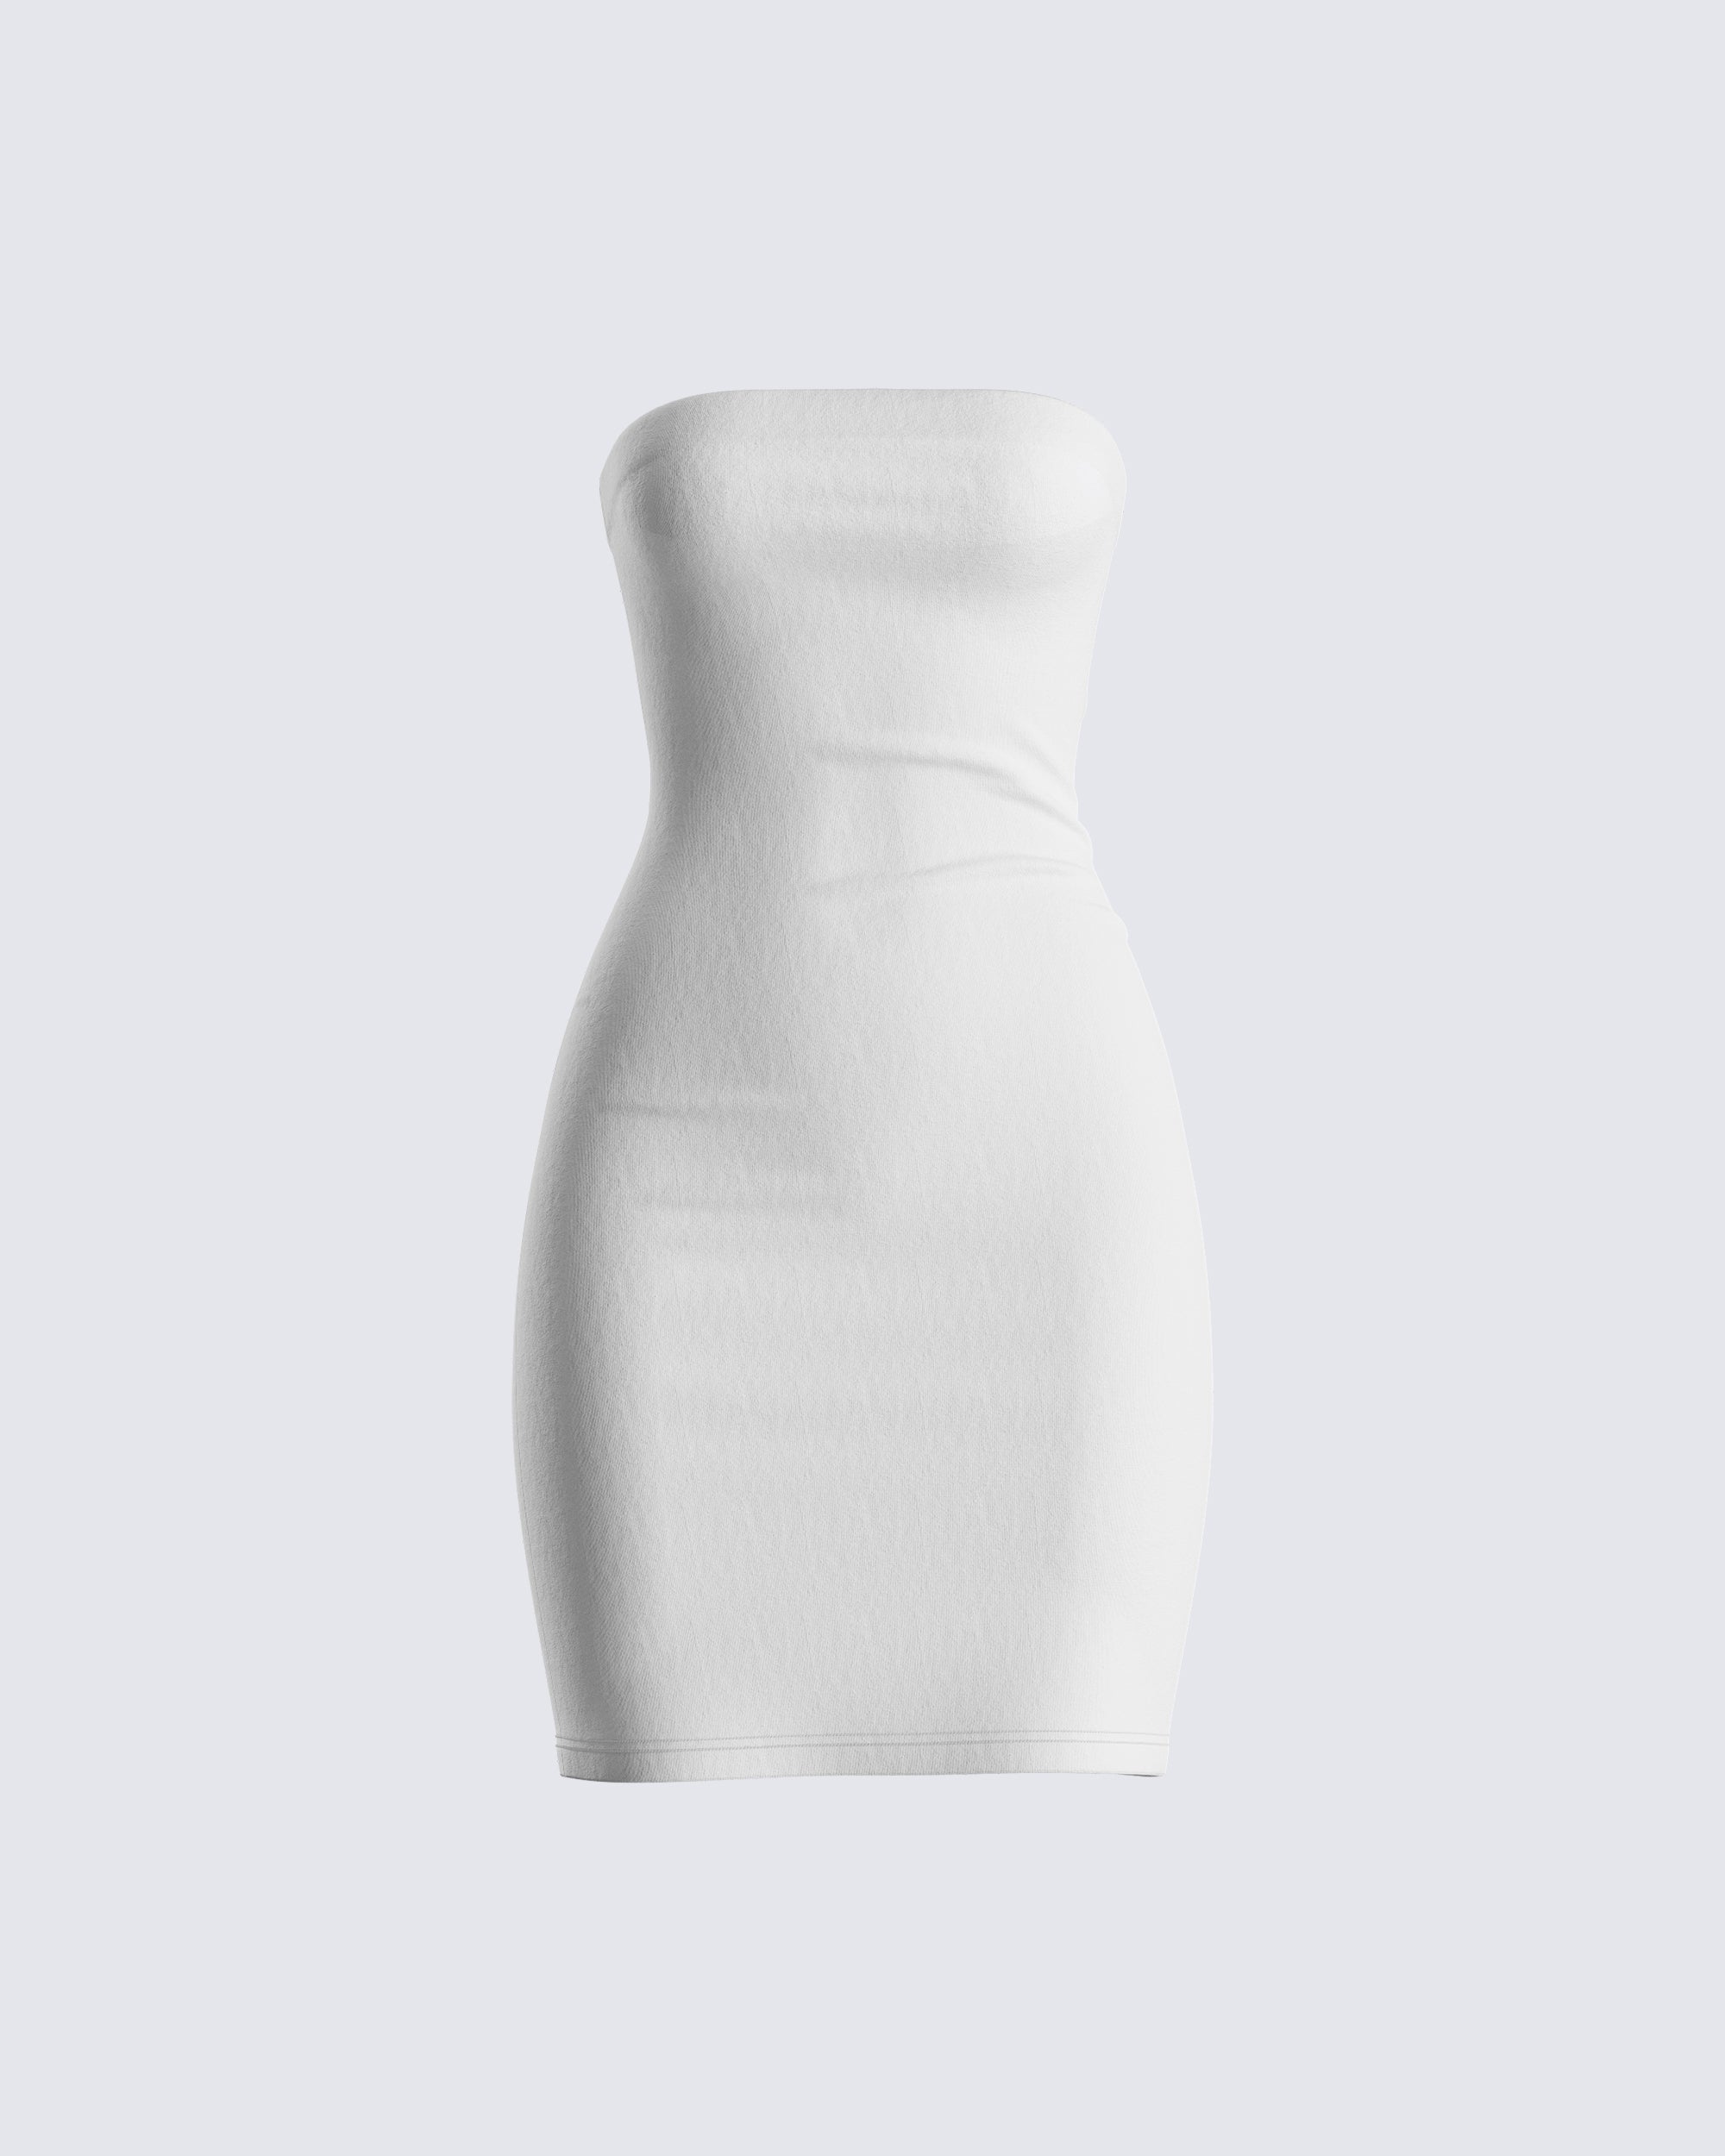 white tube dress